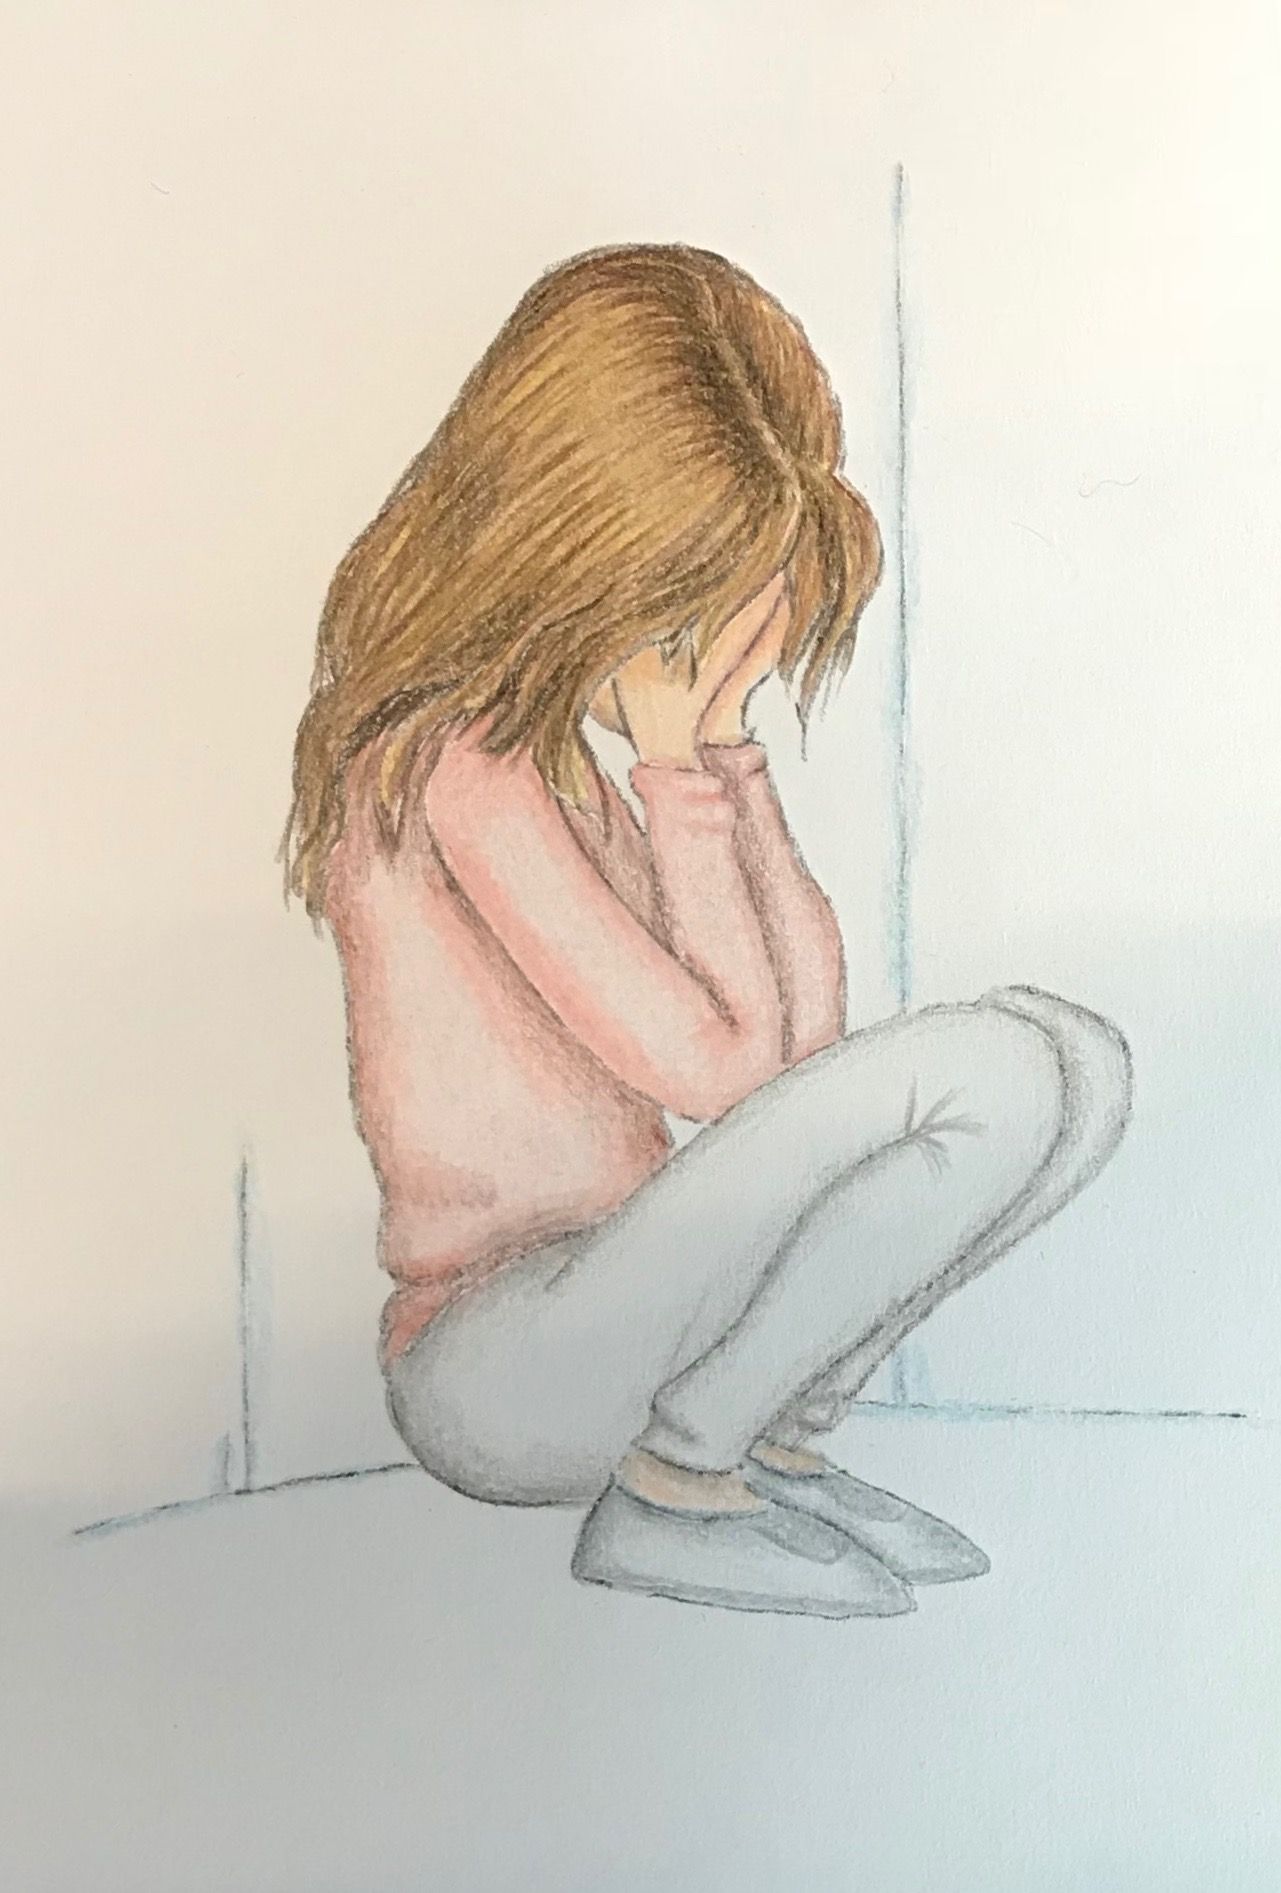 Depressed Girl Crying Girl Drawing Easy - 1281x1893 Wallpaper - teahub.io